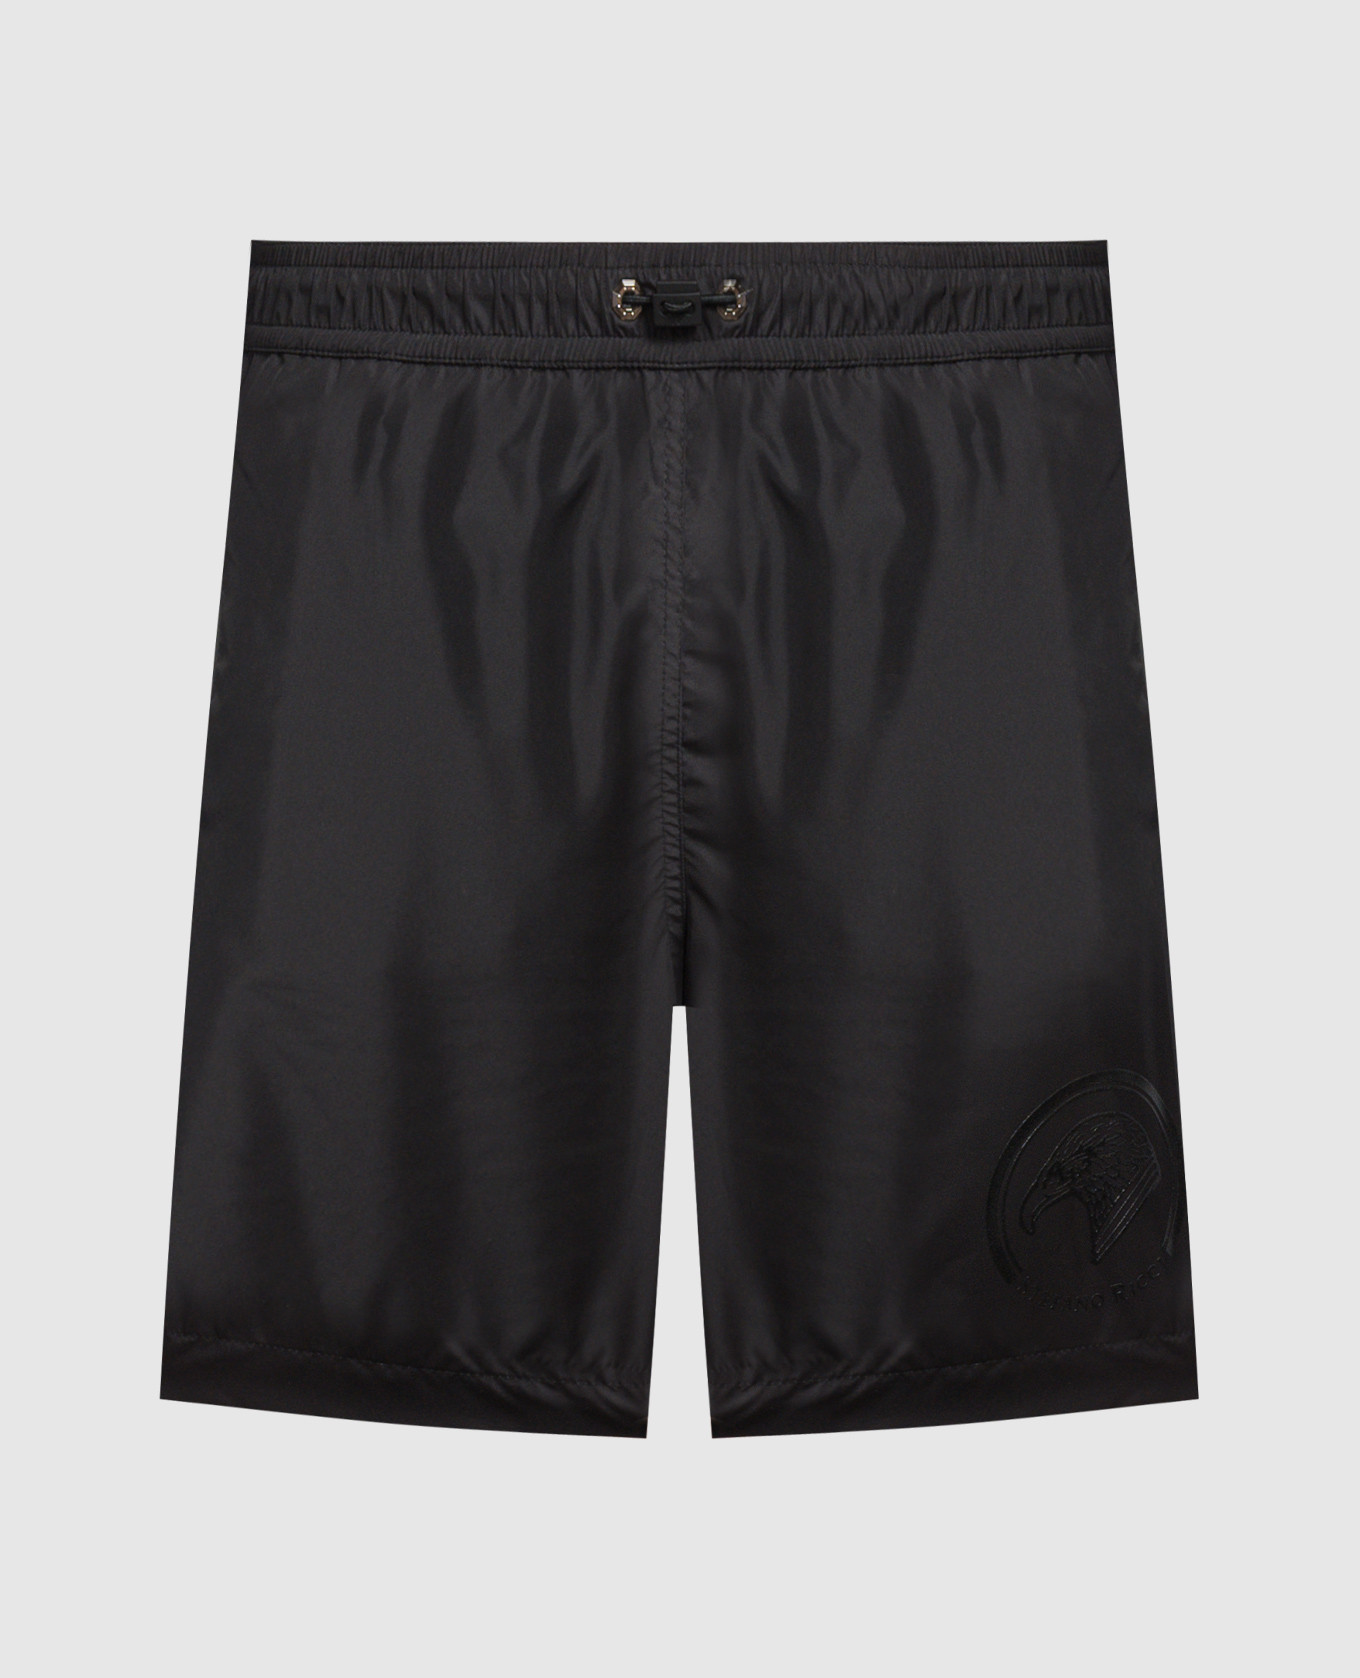 Black swim shorts with logo print